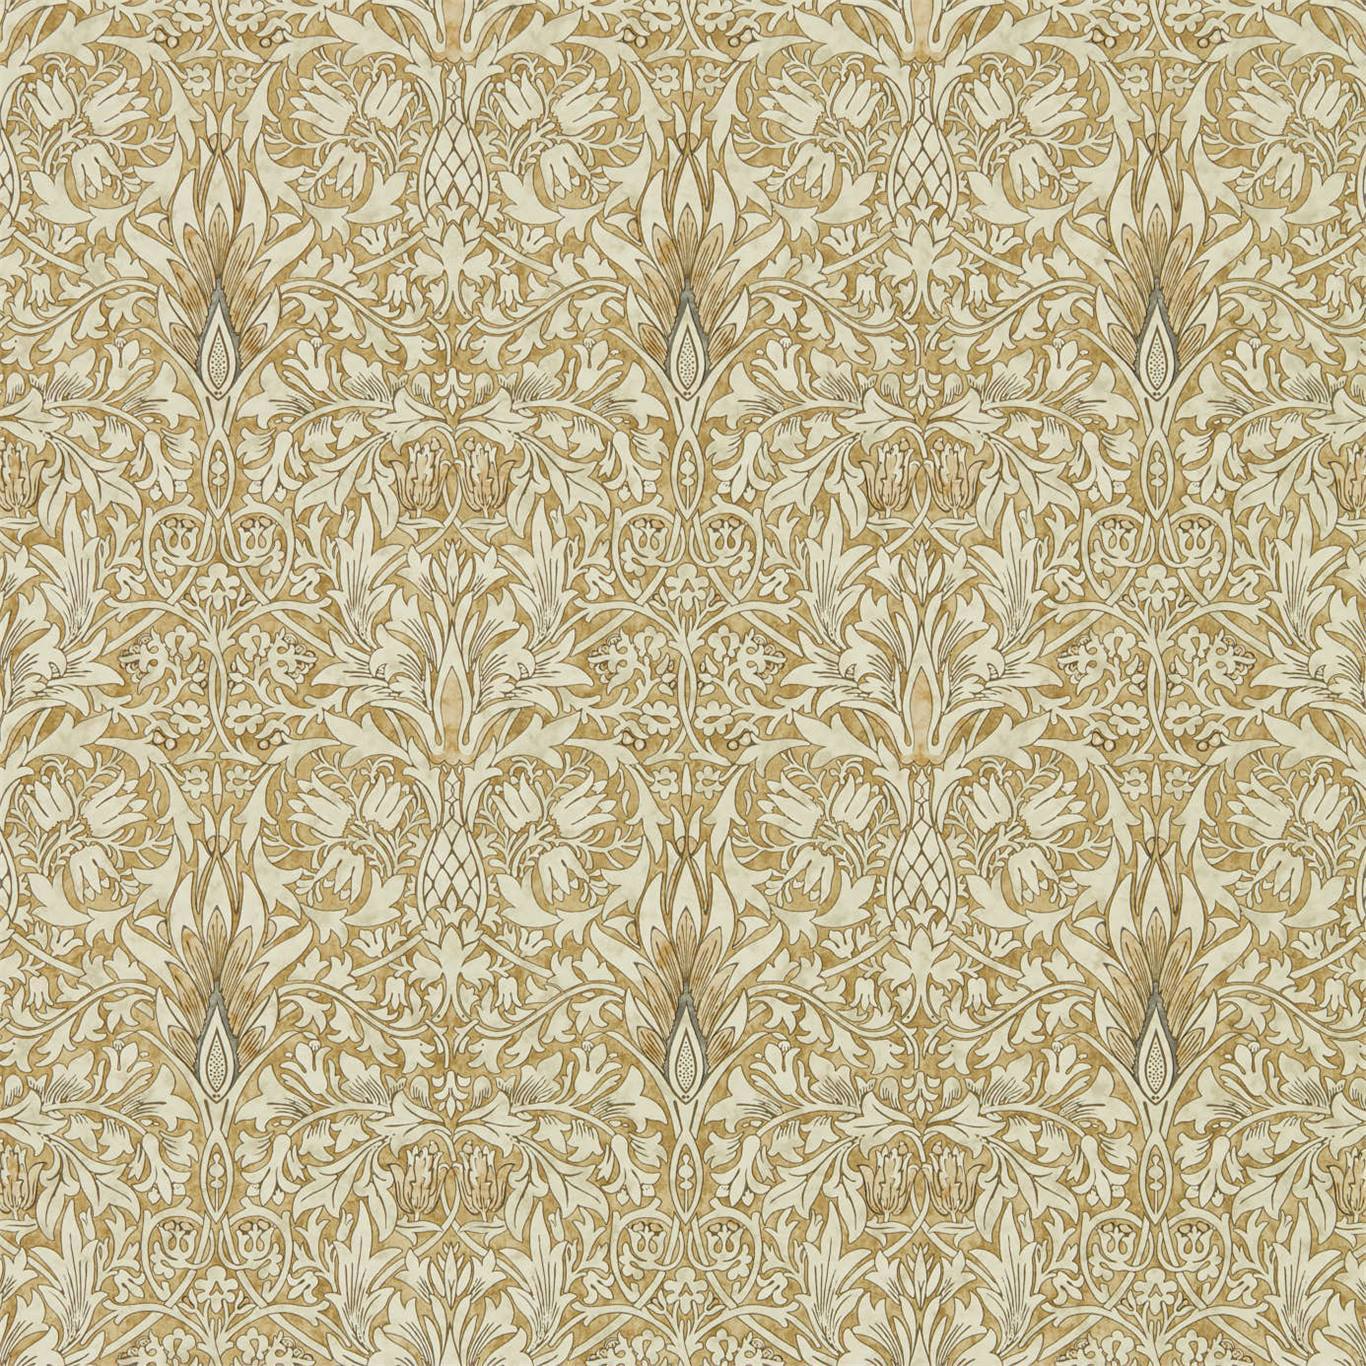 Snakeshead Gold/Linen Wallpaper DCMW216828 by Morris & Co